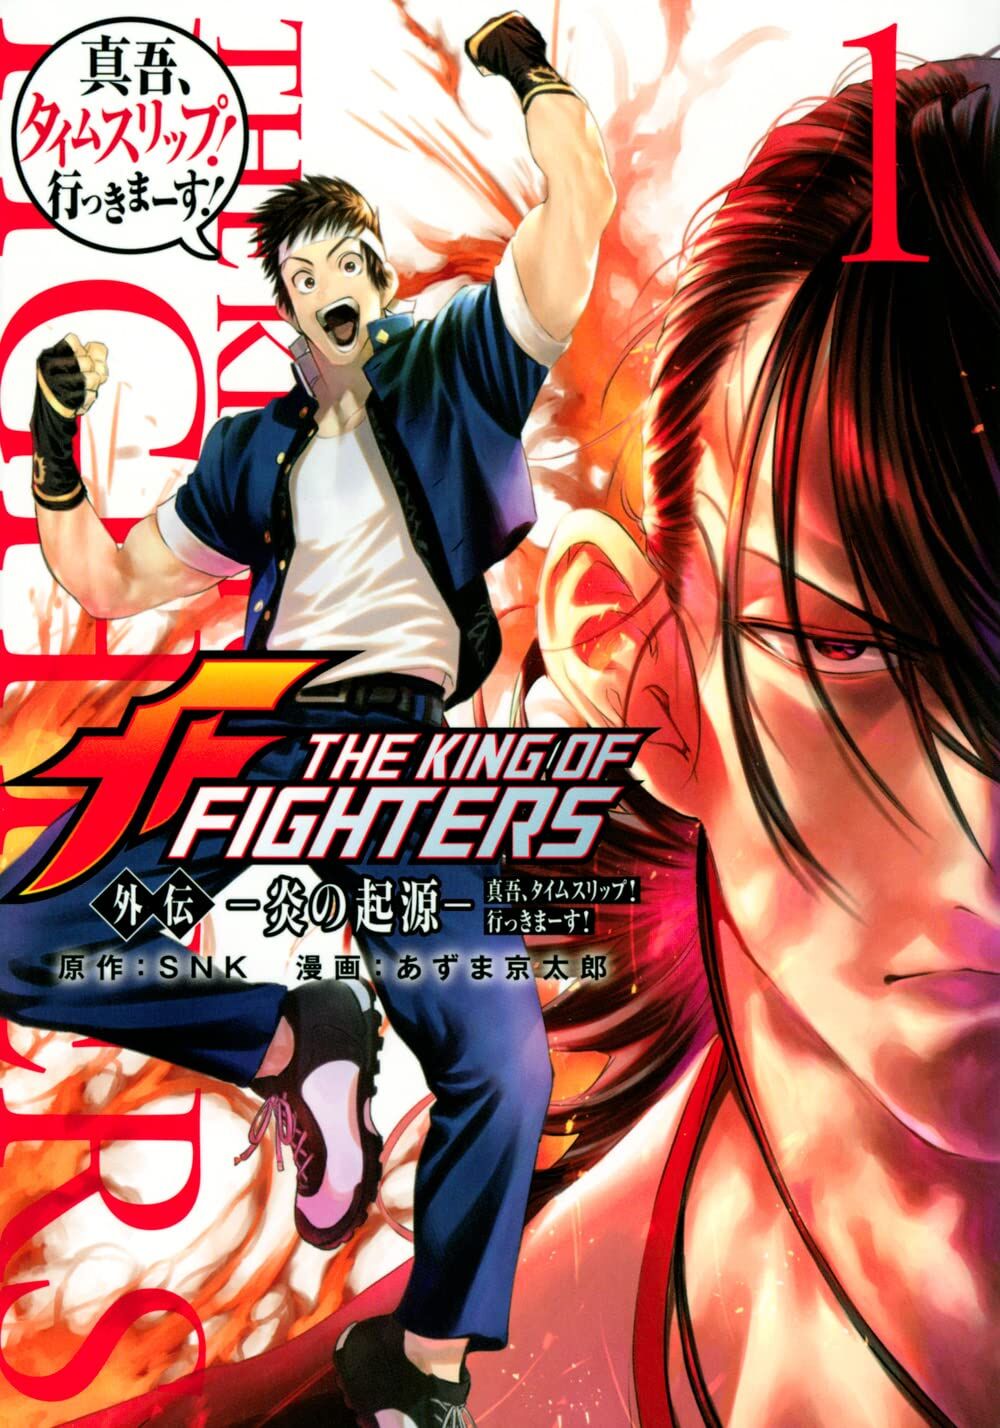 Trailer Released For King Of Fighters Movie (Spoiler Alert: It Looks  Terrible) - Game Informer